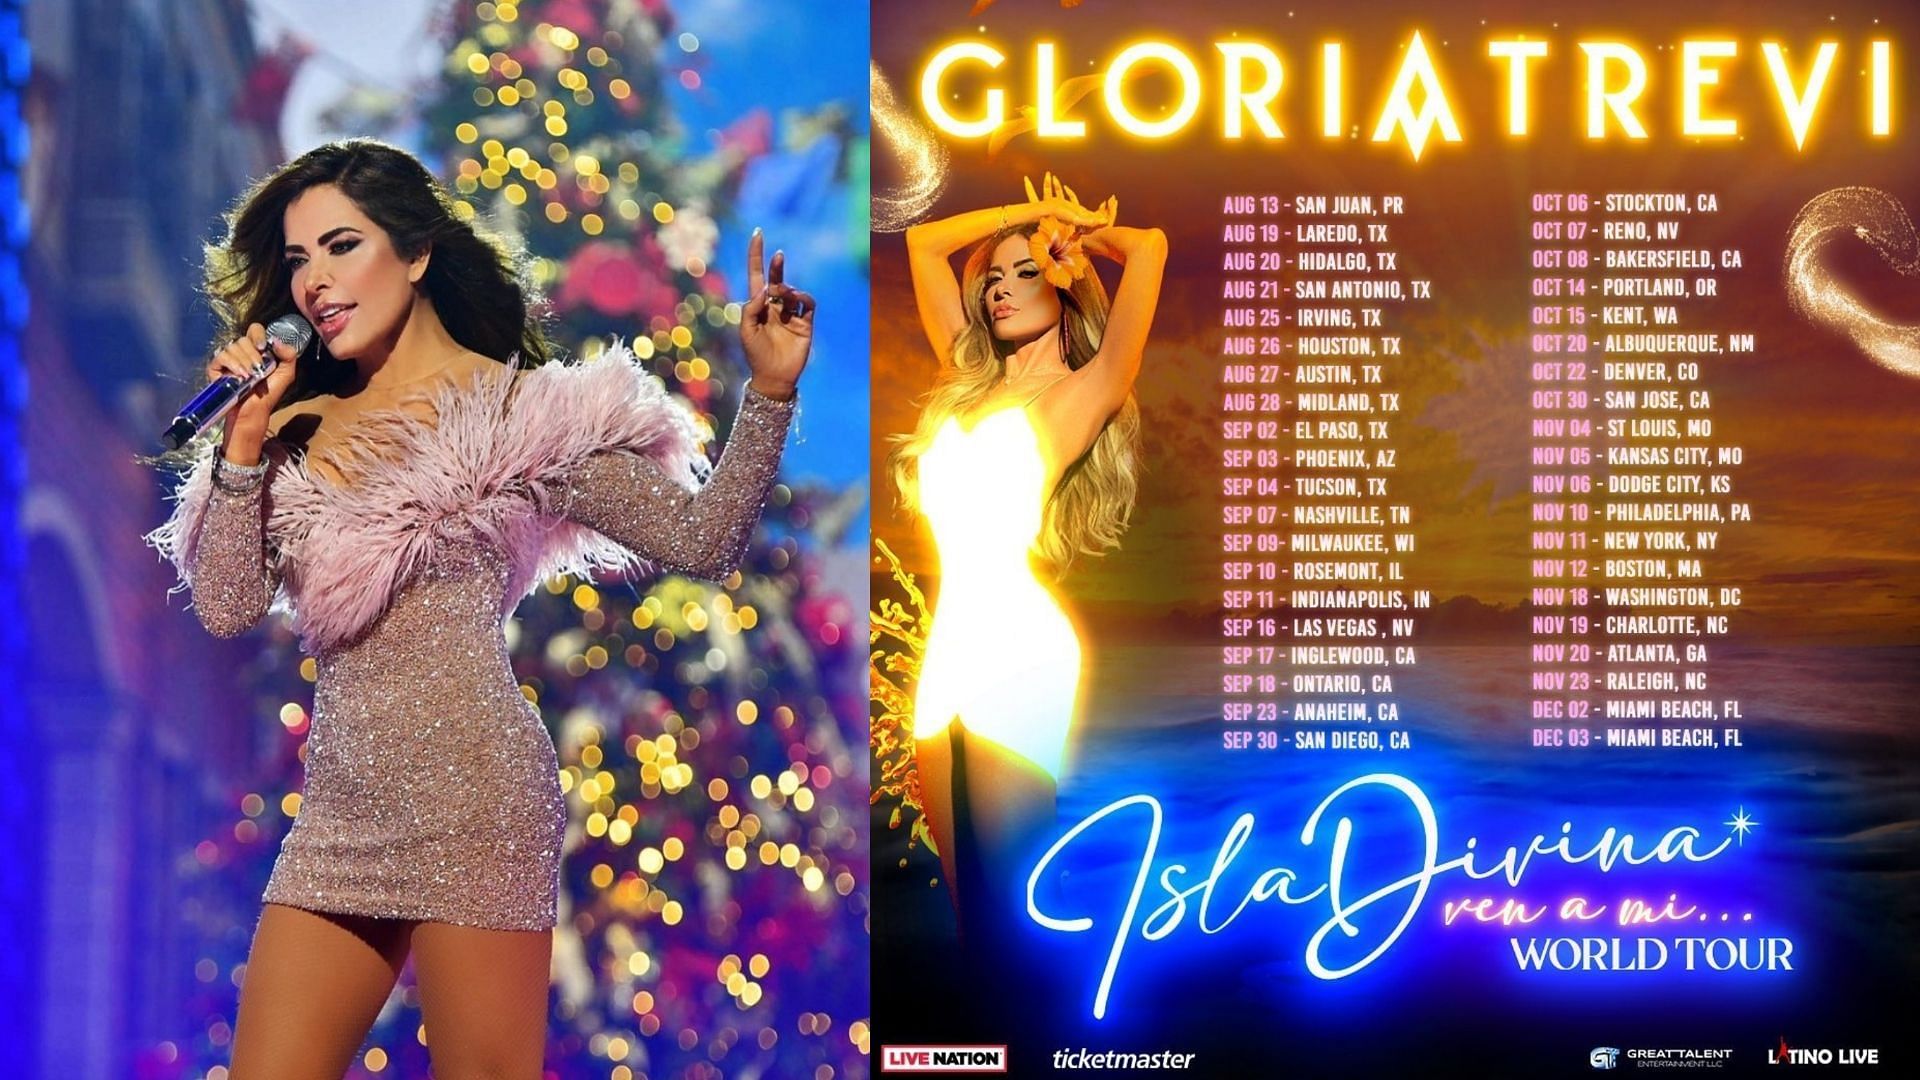 Gloria Trevi Tour 2022 tickets Presale, where to buy, price, dates